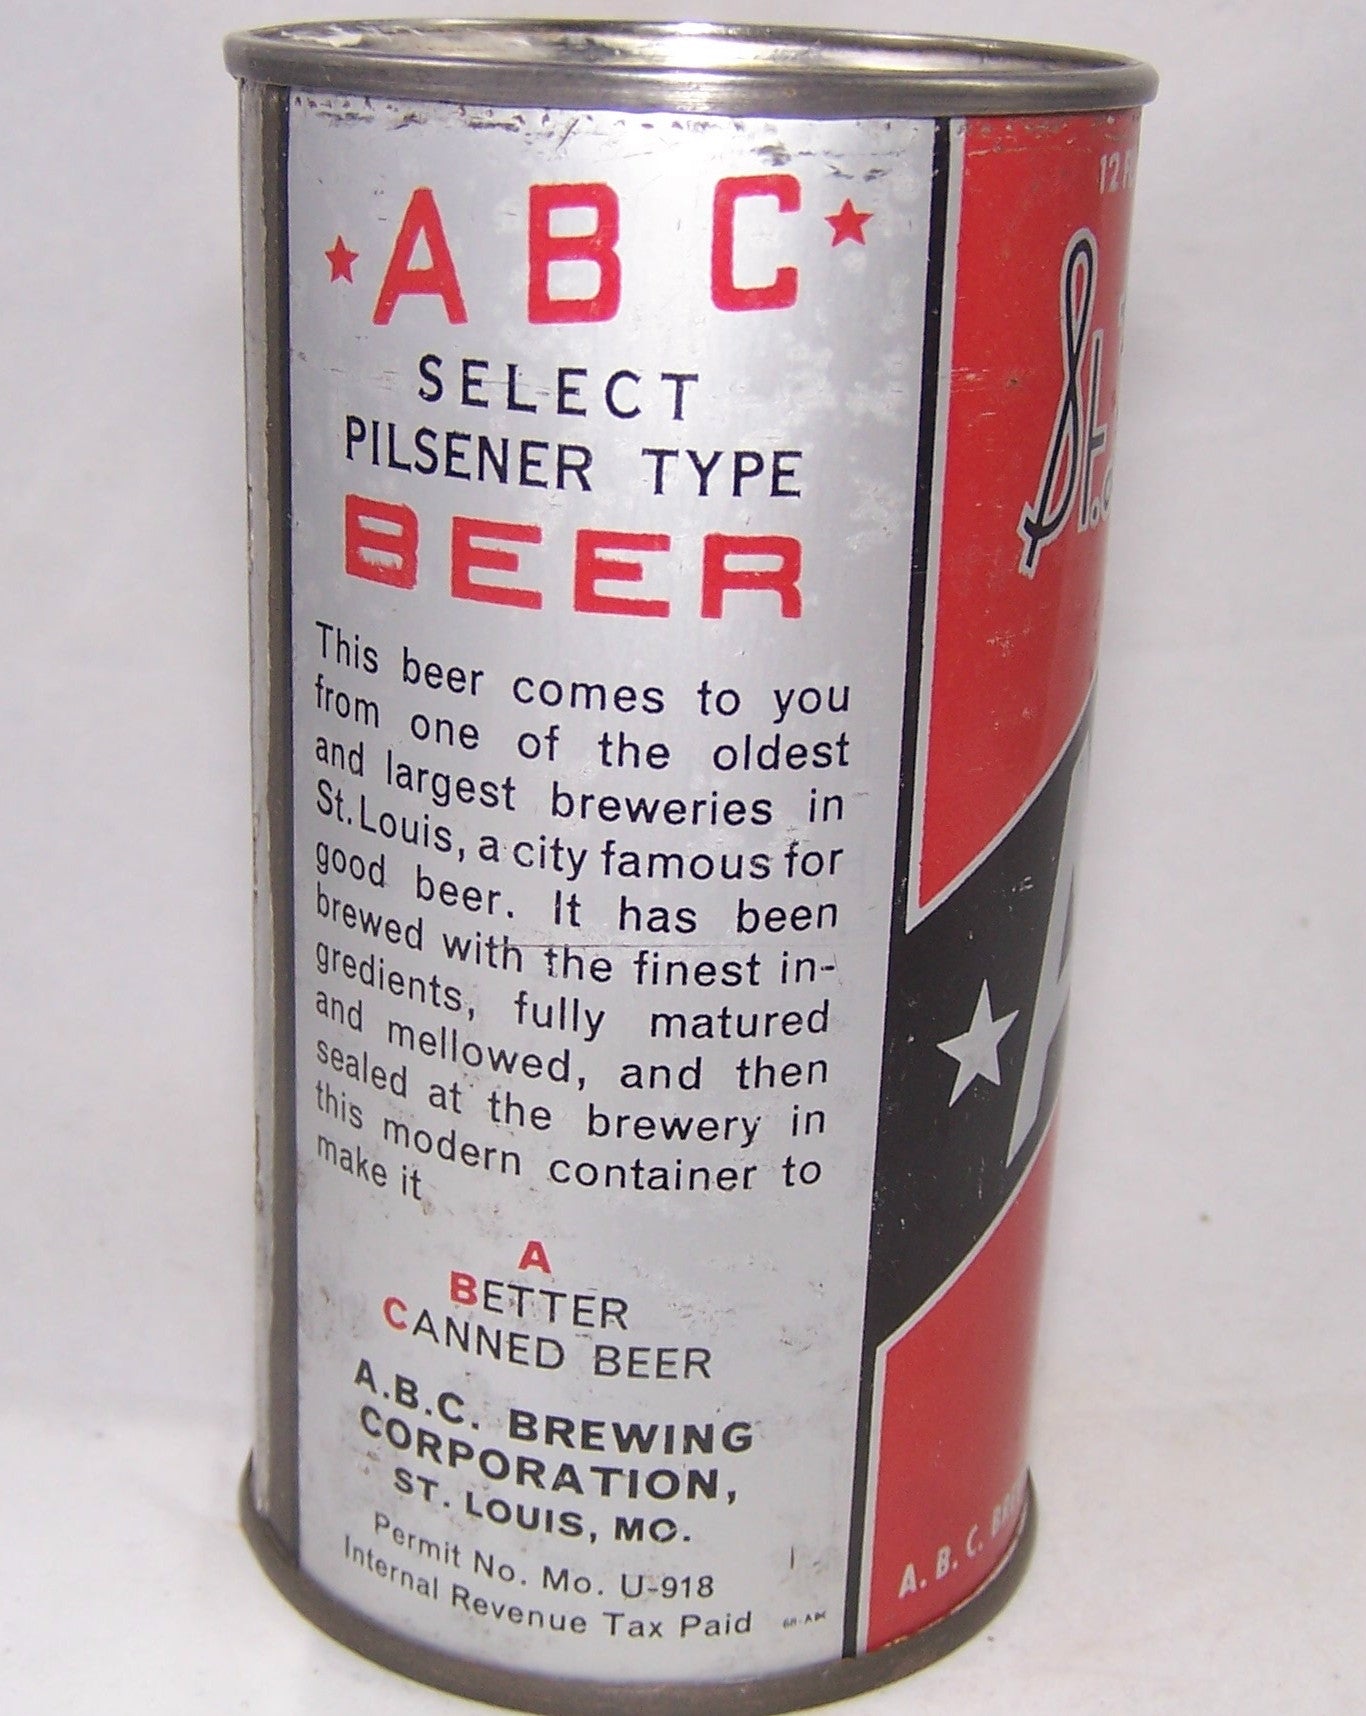 St. Louis ABC Pilsener Type Beer, Lilek #4, Grade 1-